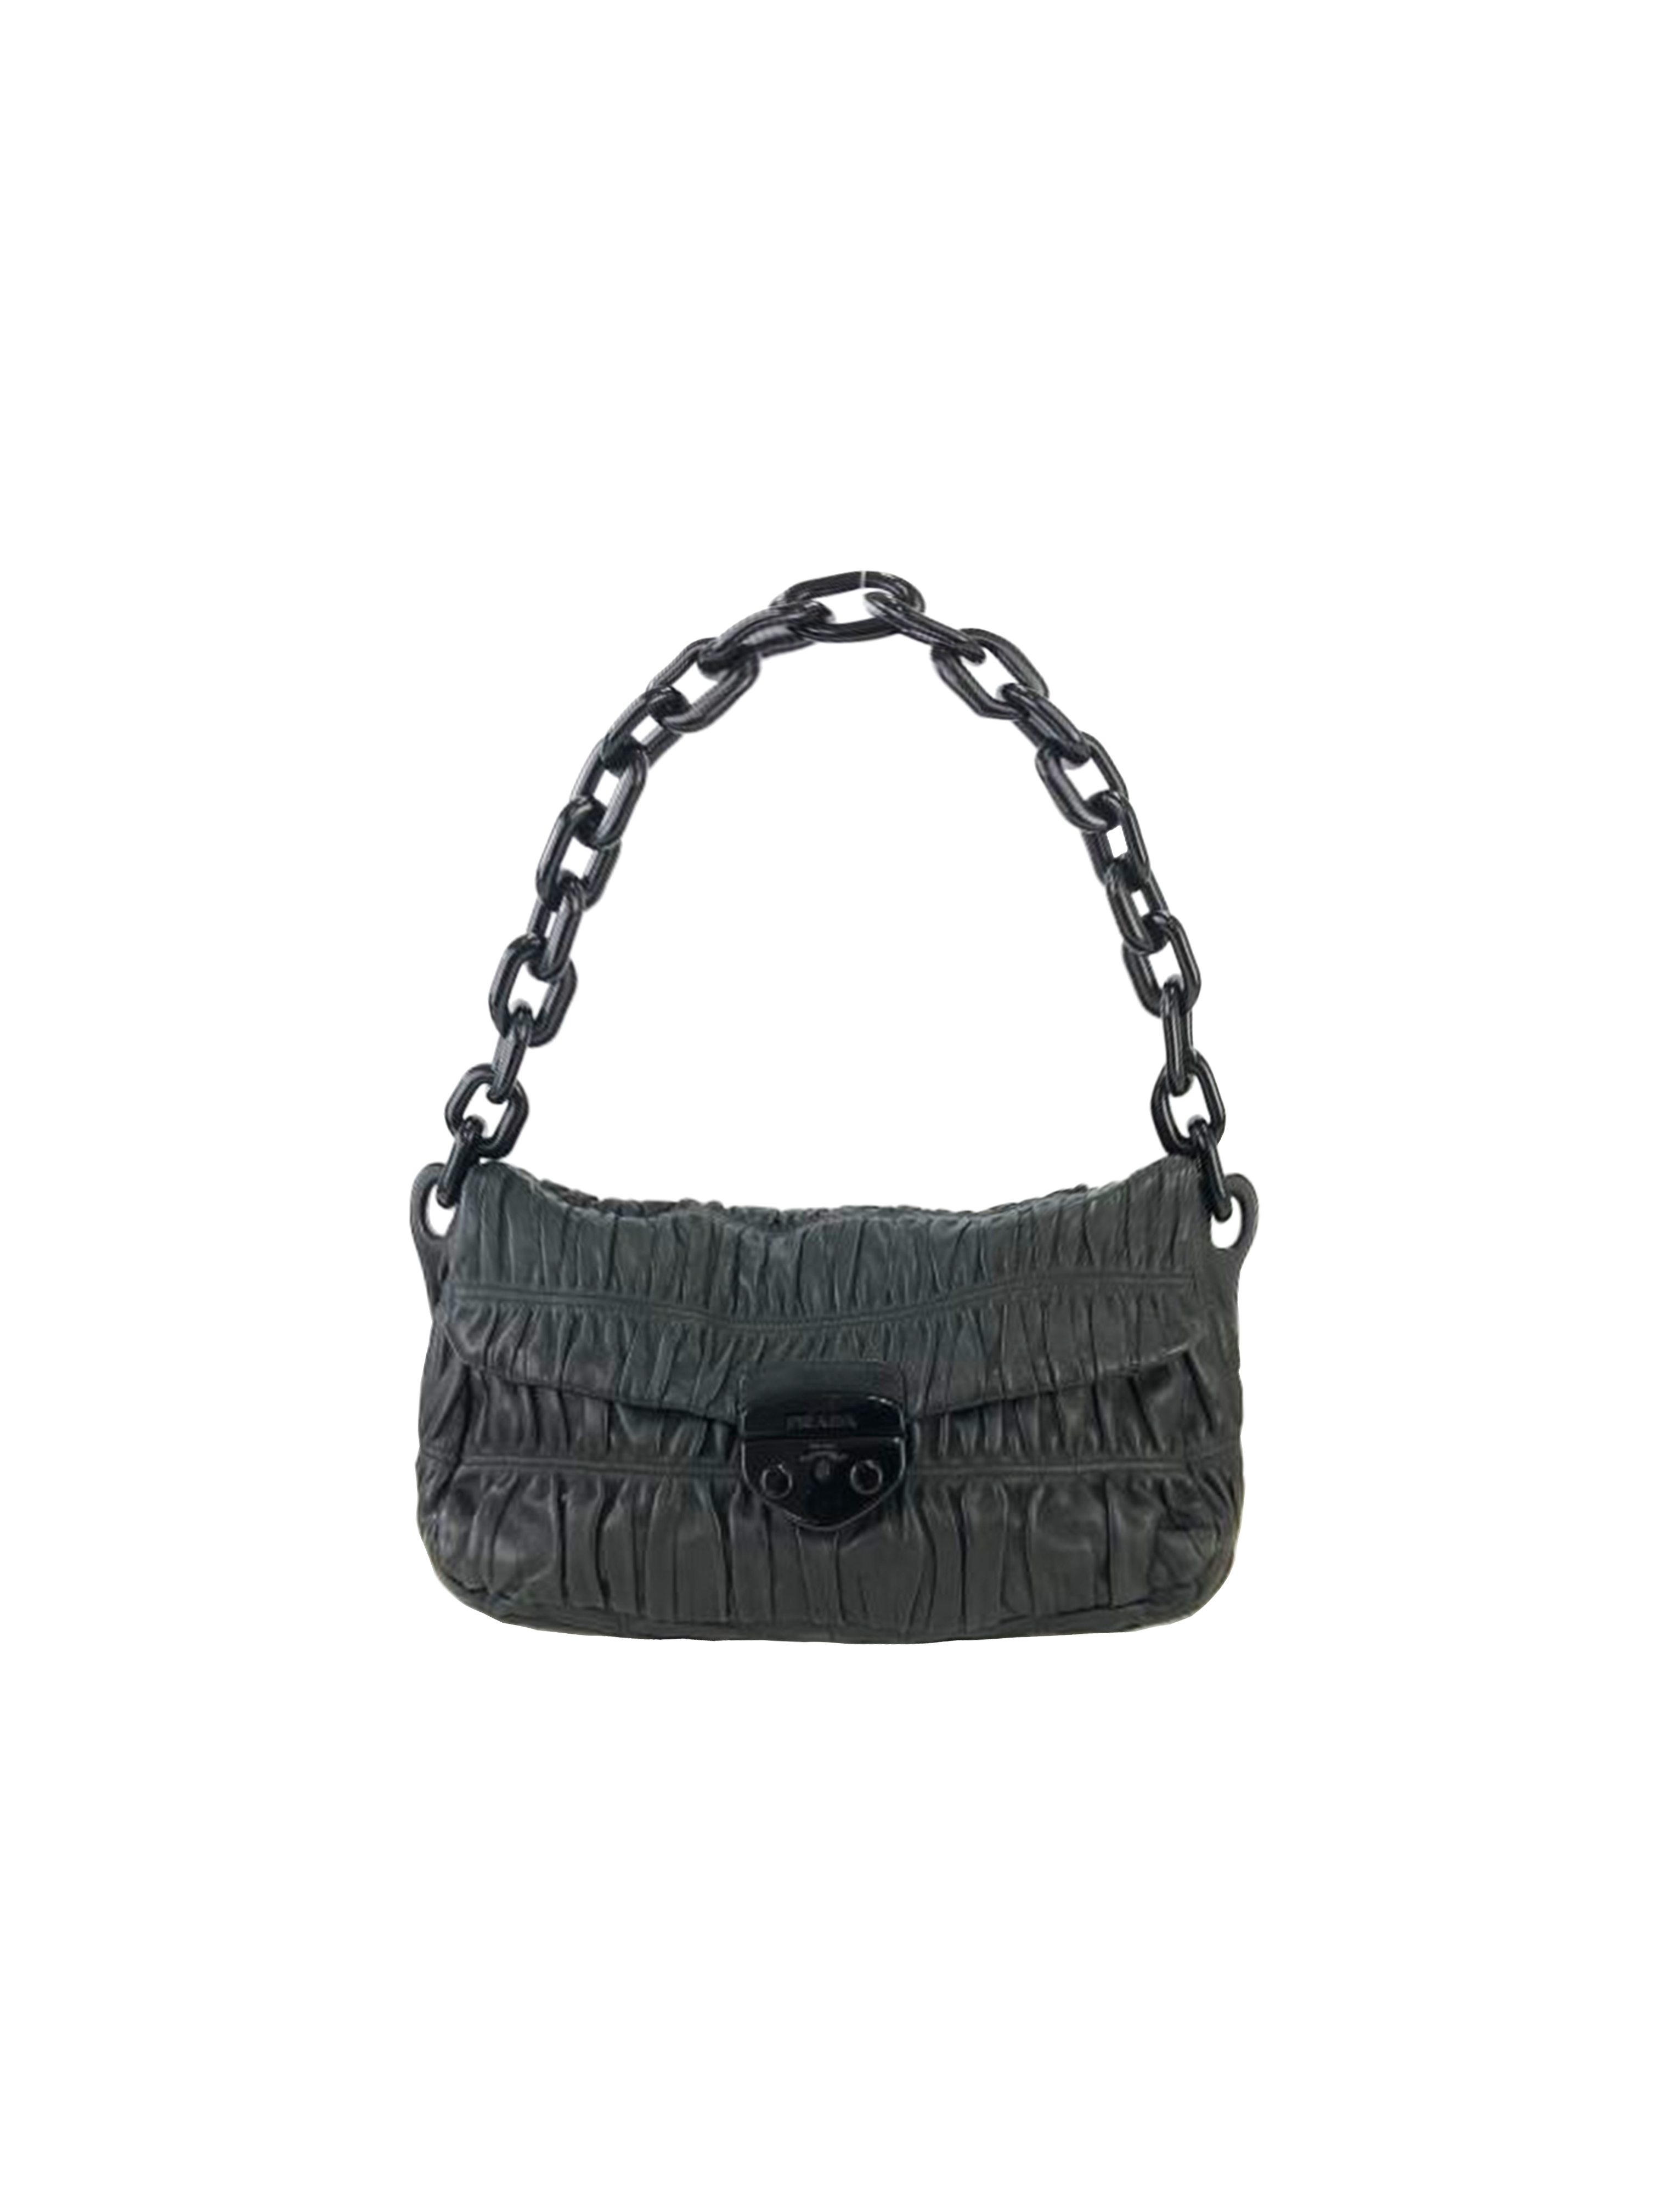 Prada 2010s Black Leather Gaufre Chain Shoulder Bag